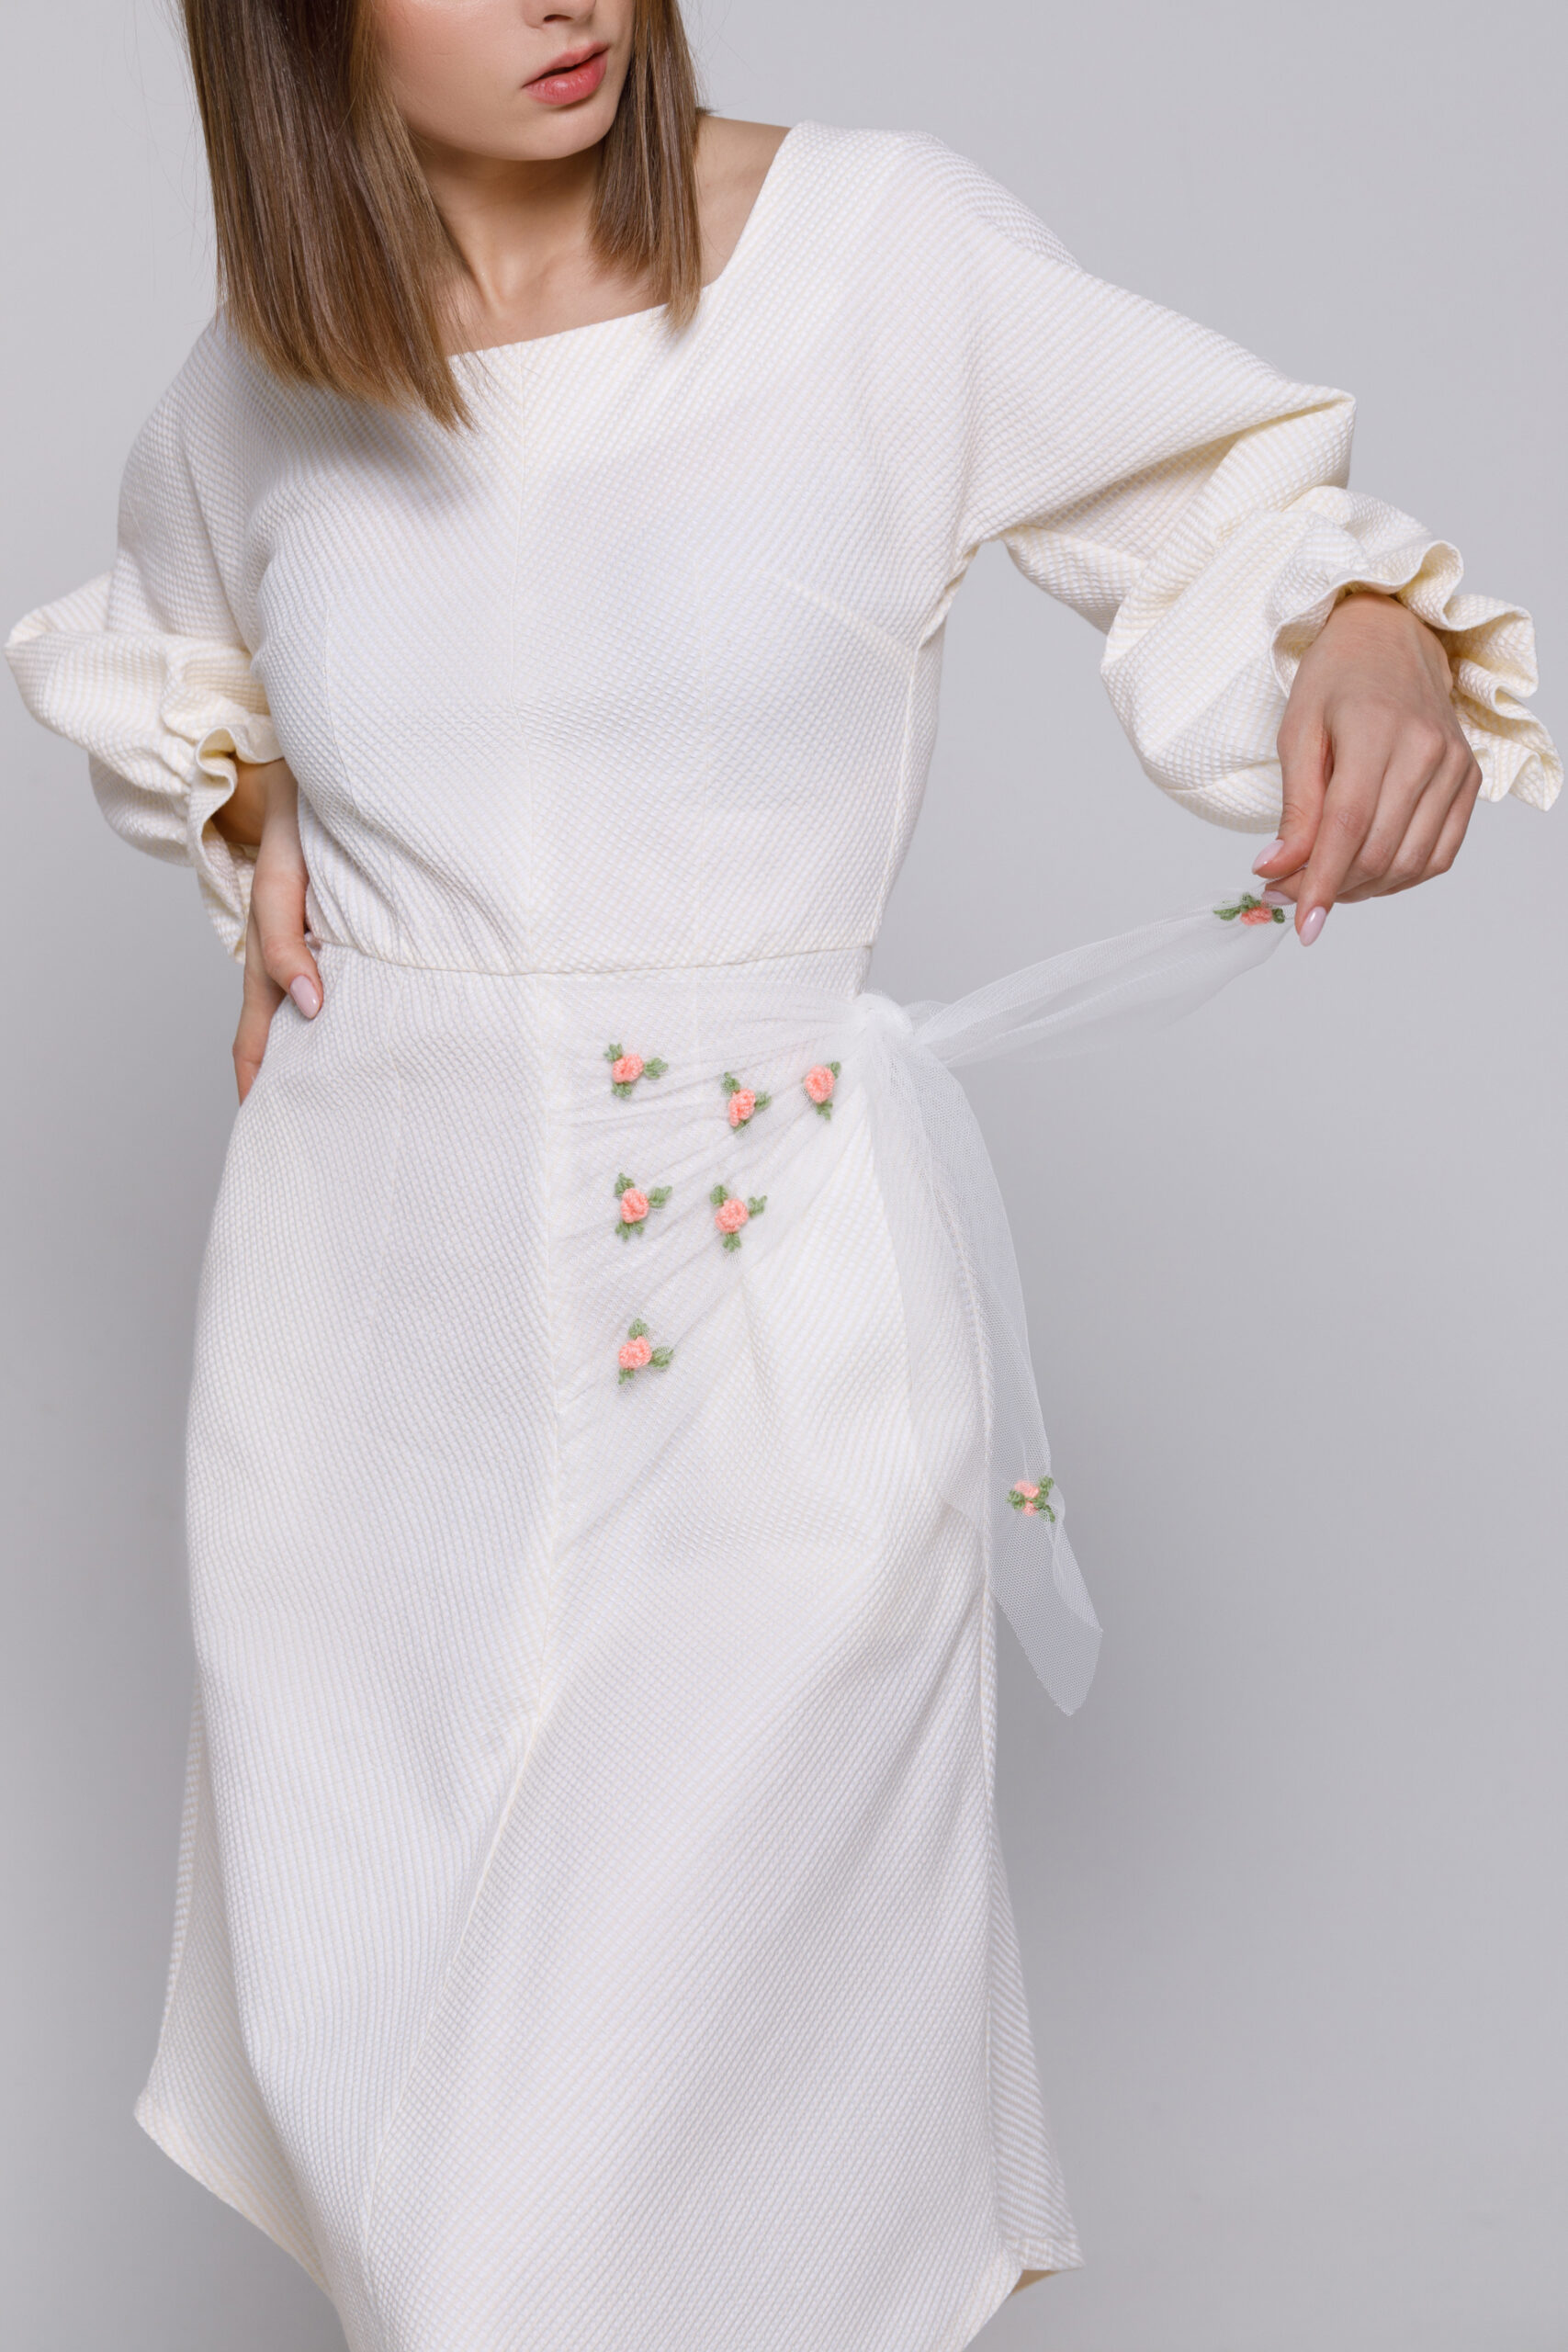 HARRIS white asymmetric dress. Natural fabrics, original design, handmade embroidery